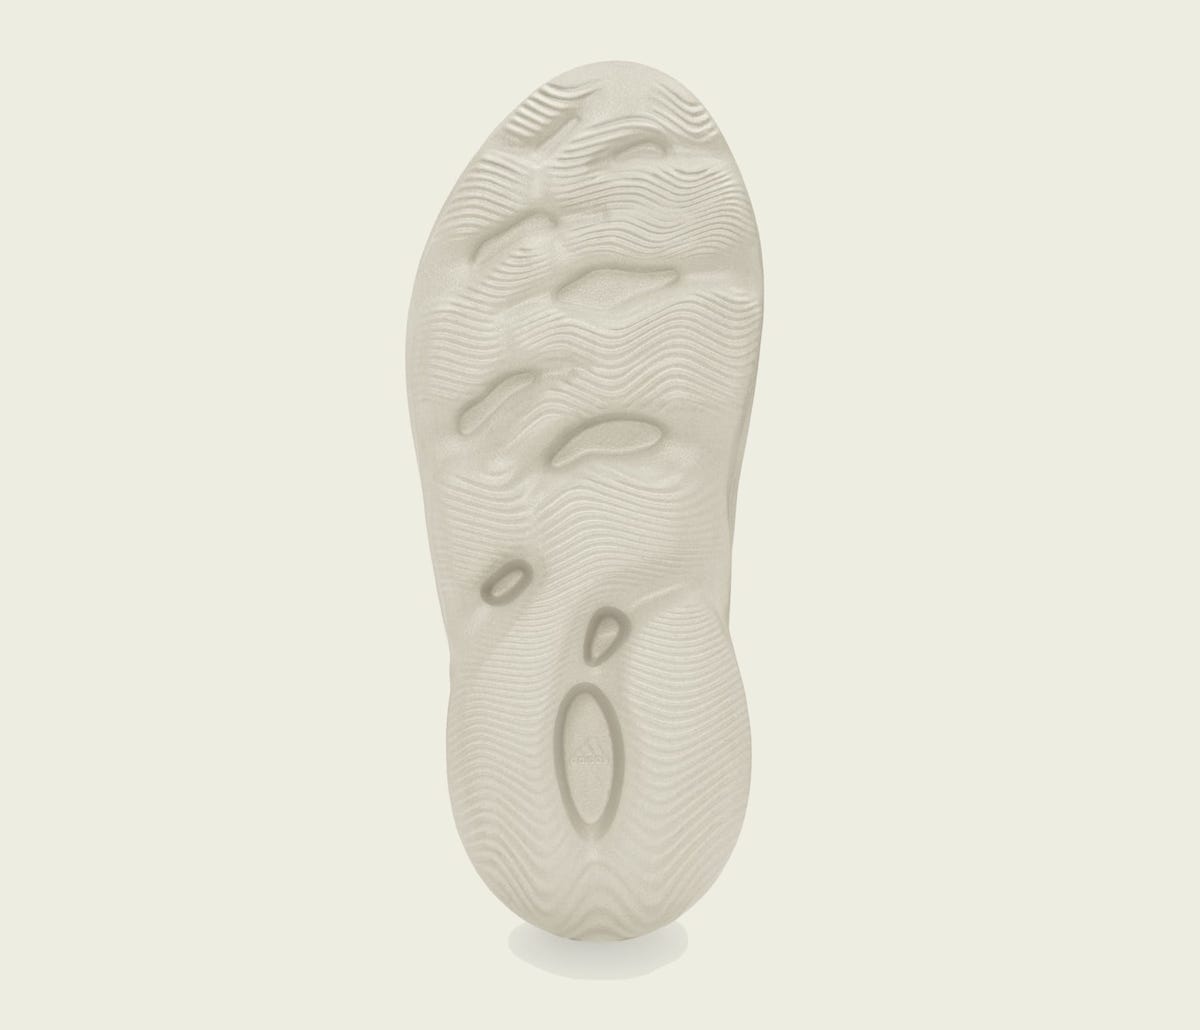 adidas-Yeezy-Foam-Runner-Sand-FY4567-Restock-Release-Date-3